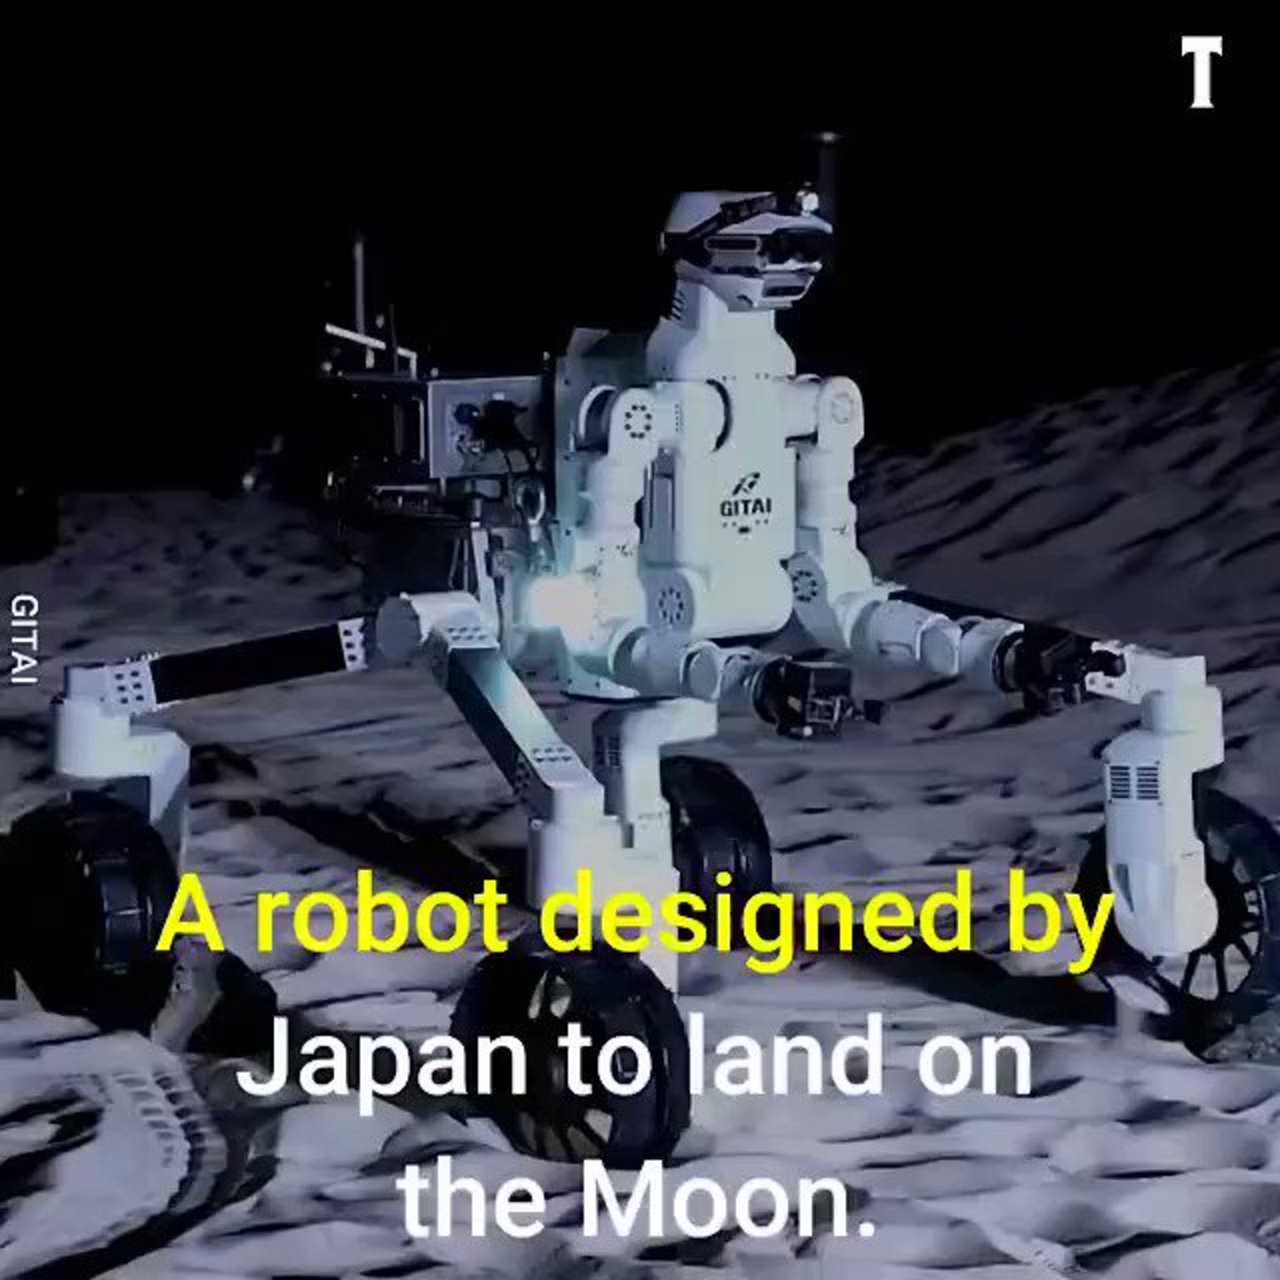 A #Robot designed by Japan to land on the moon via @CurieuxExplorer #Robotics #MachineLearning #Innovation #AI #ArtificialIntelligence #MI #Tech #Technology cc: @akwyz @severinelienard @danielnewmanuv https://t.co/9MCNhlg2gY